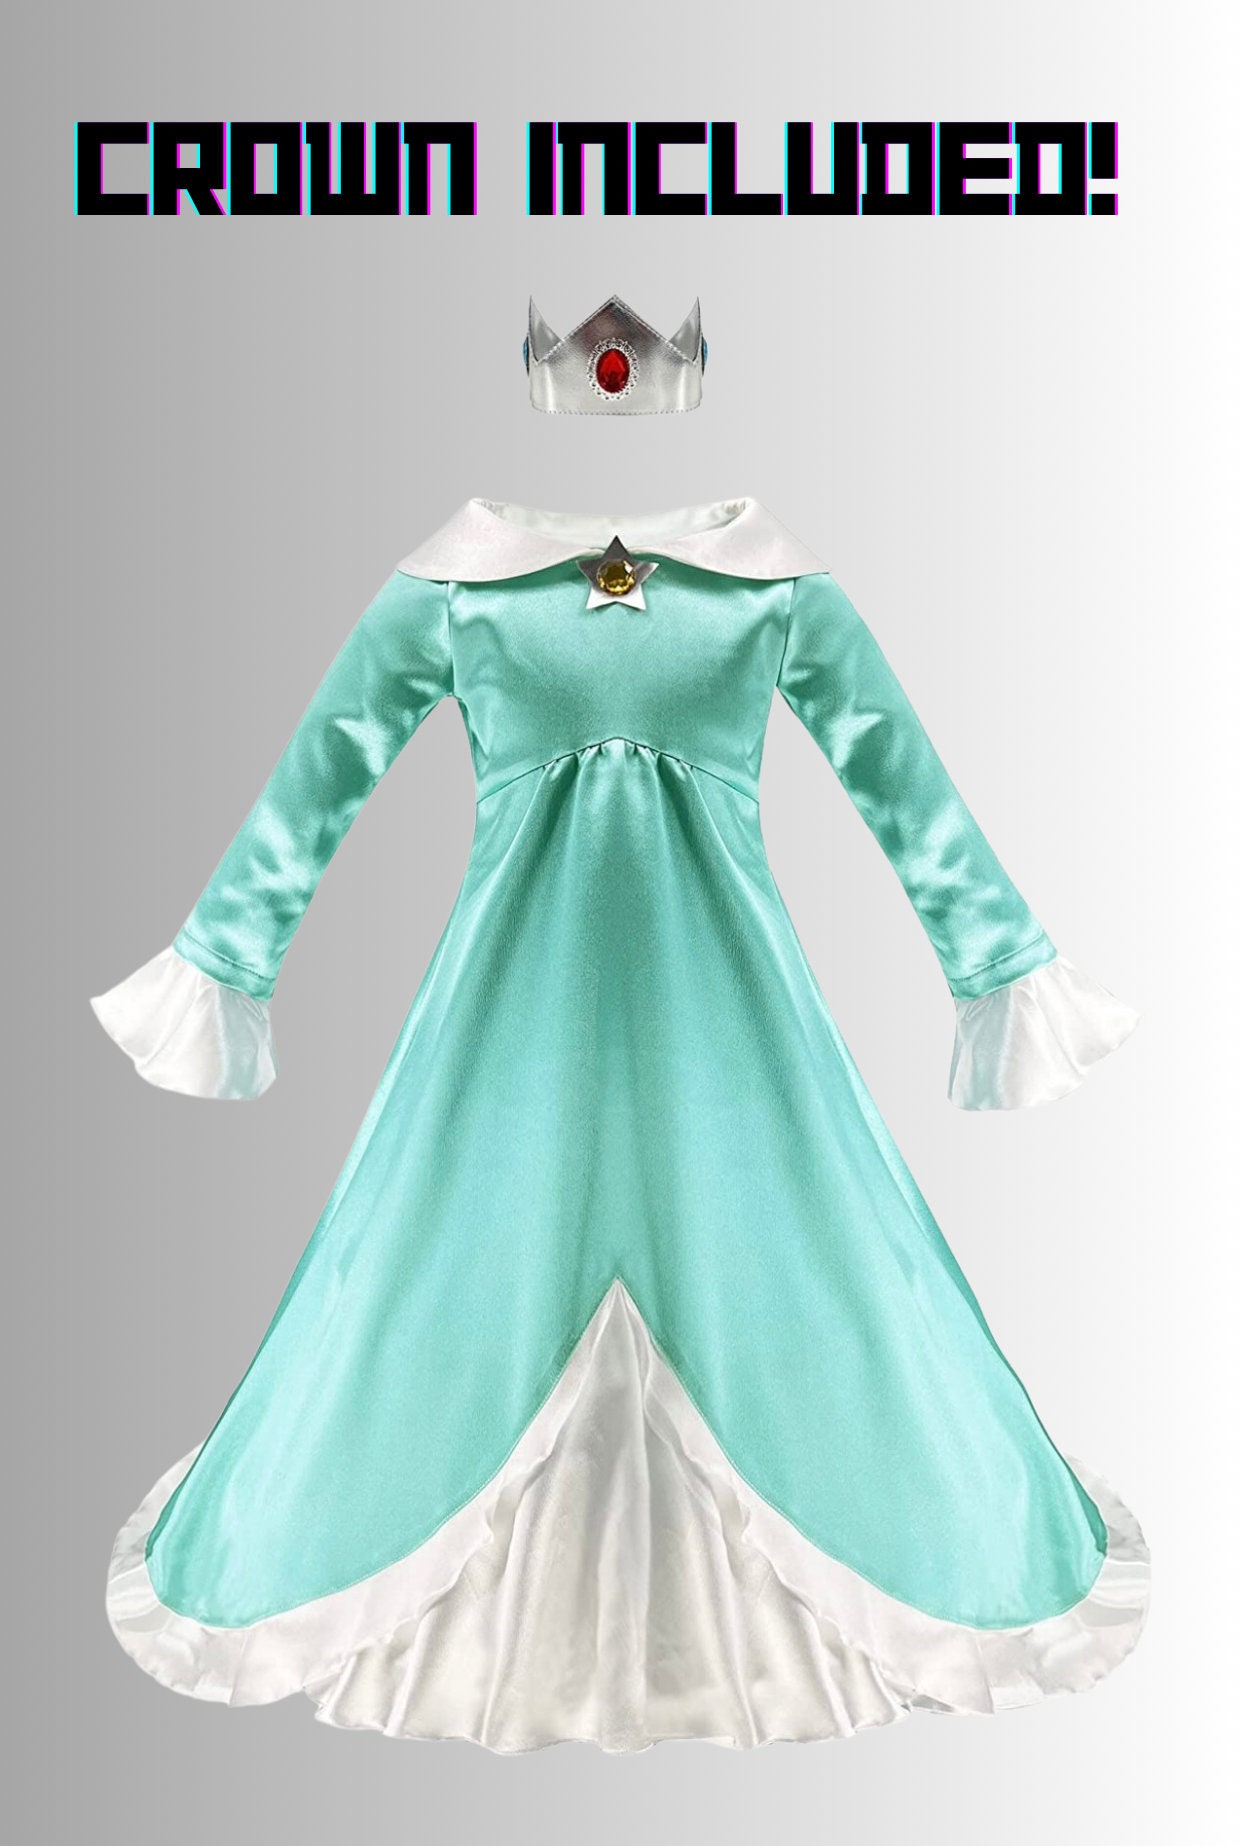 Super Mario Galaxy Wii U Rosalina & Luma Cosplay Accessories mp003135 -  Best Profession Cosplay Costumes Online Shop